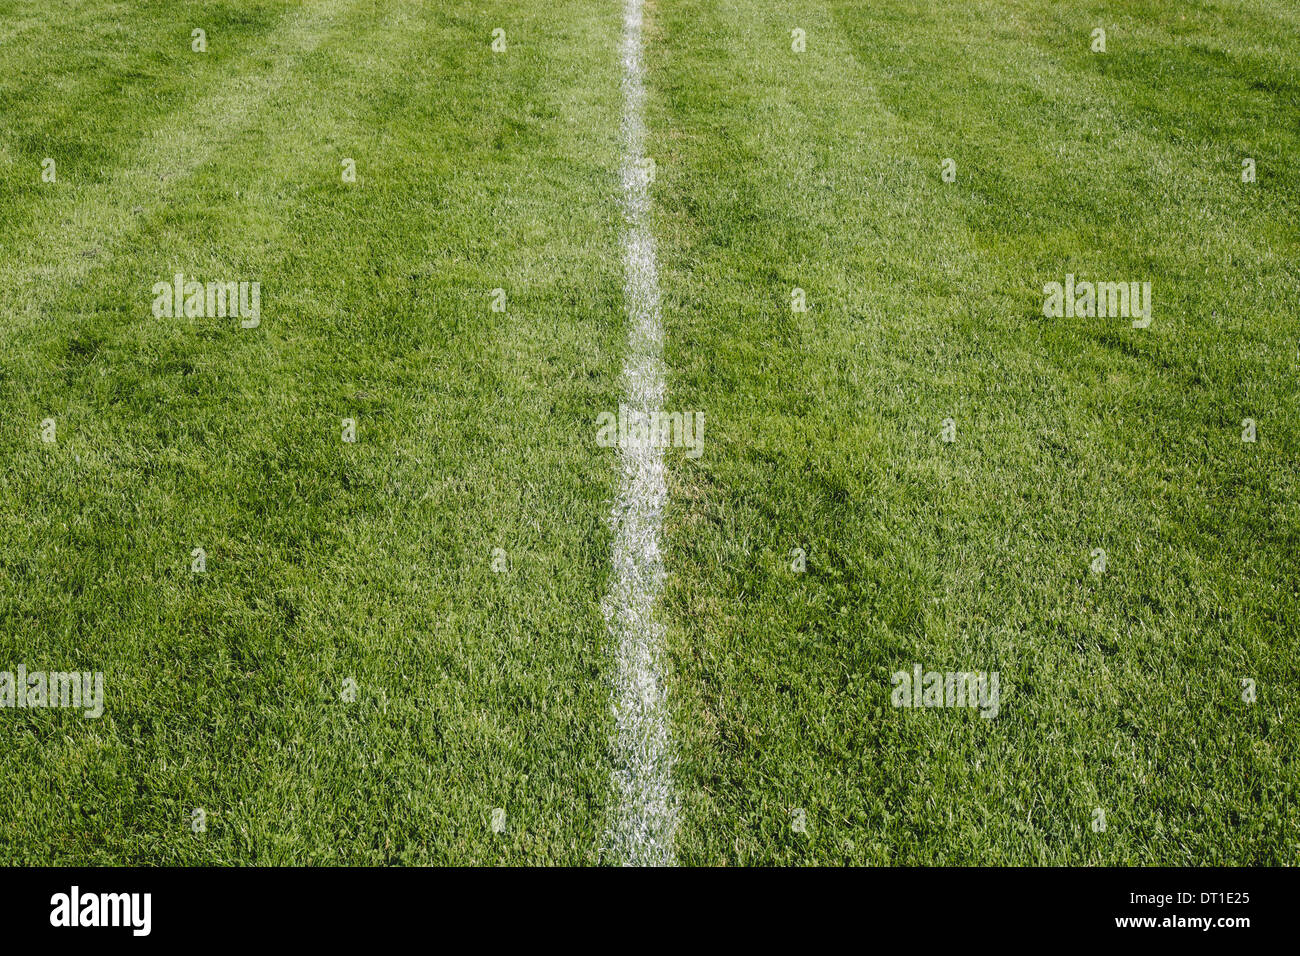 Washington State USA White centre line on cut grass sports surface Stock Photo